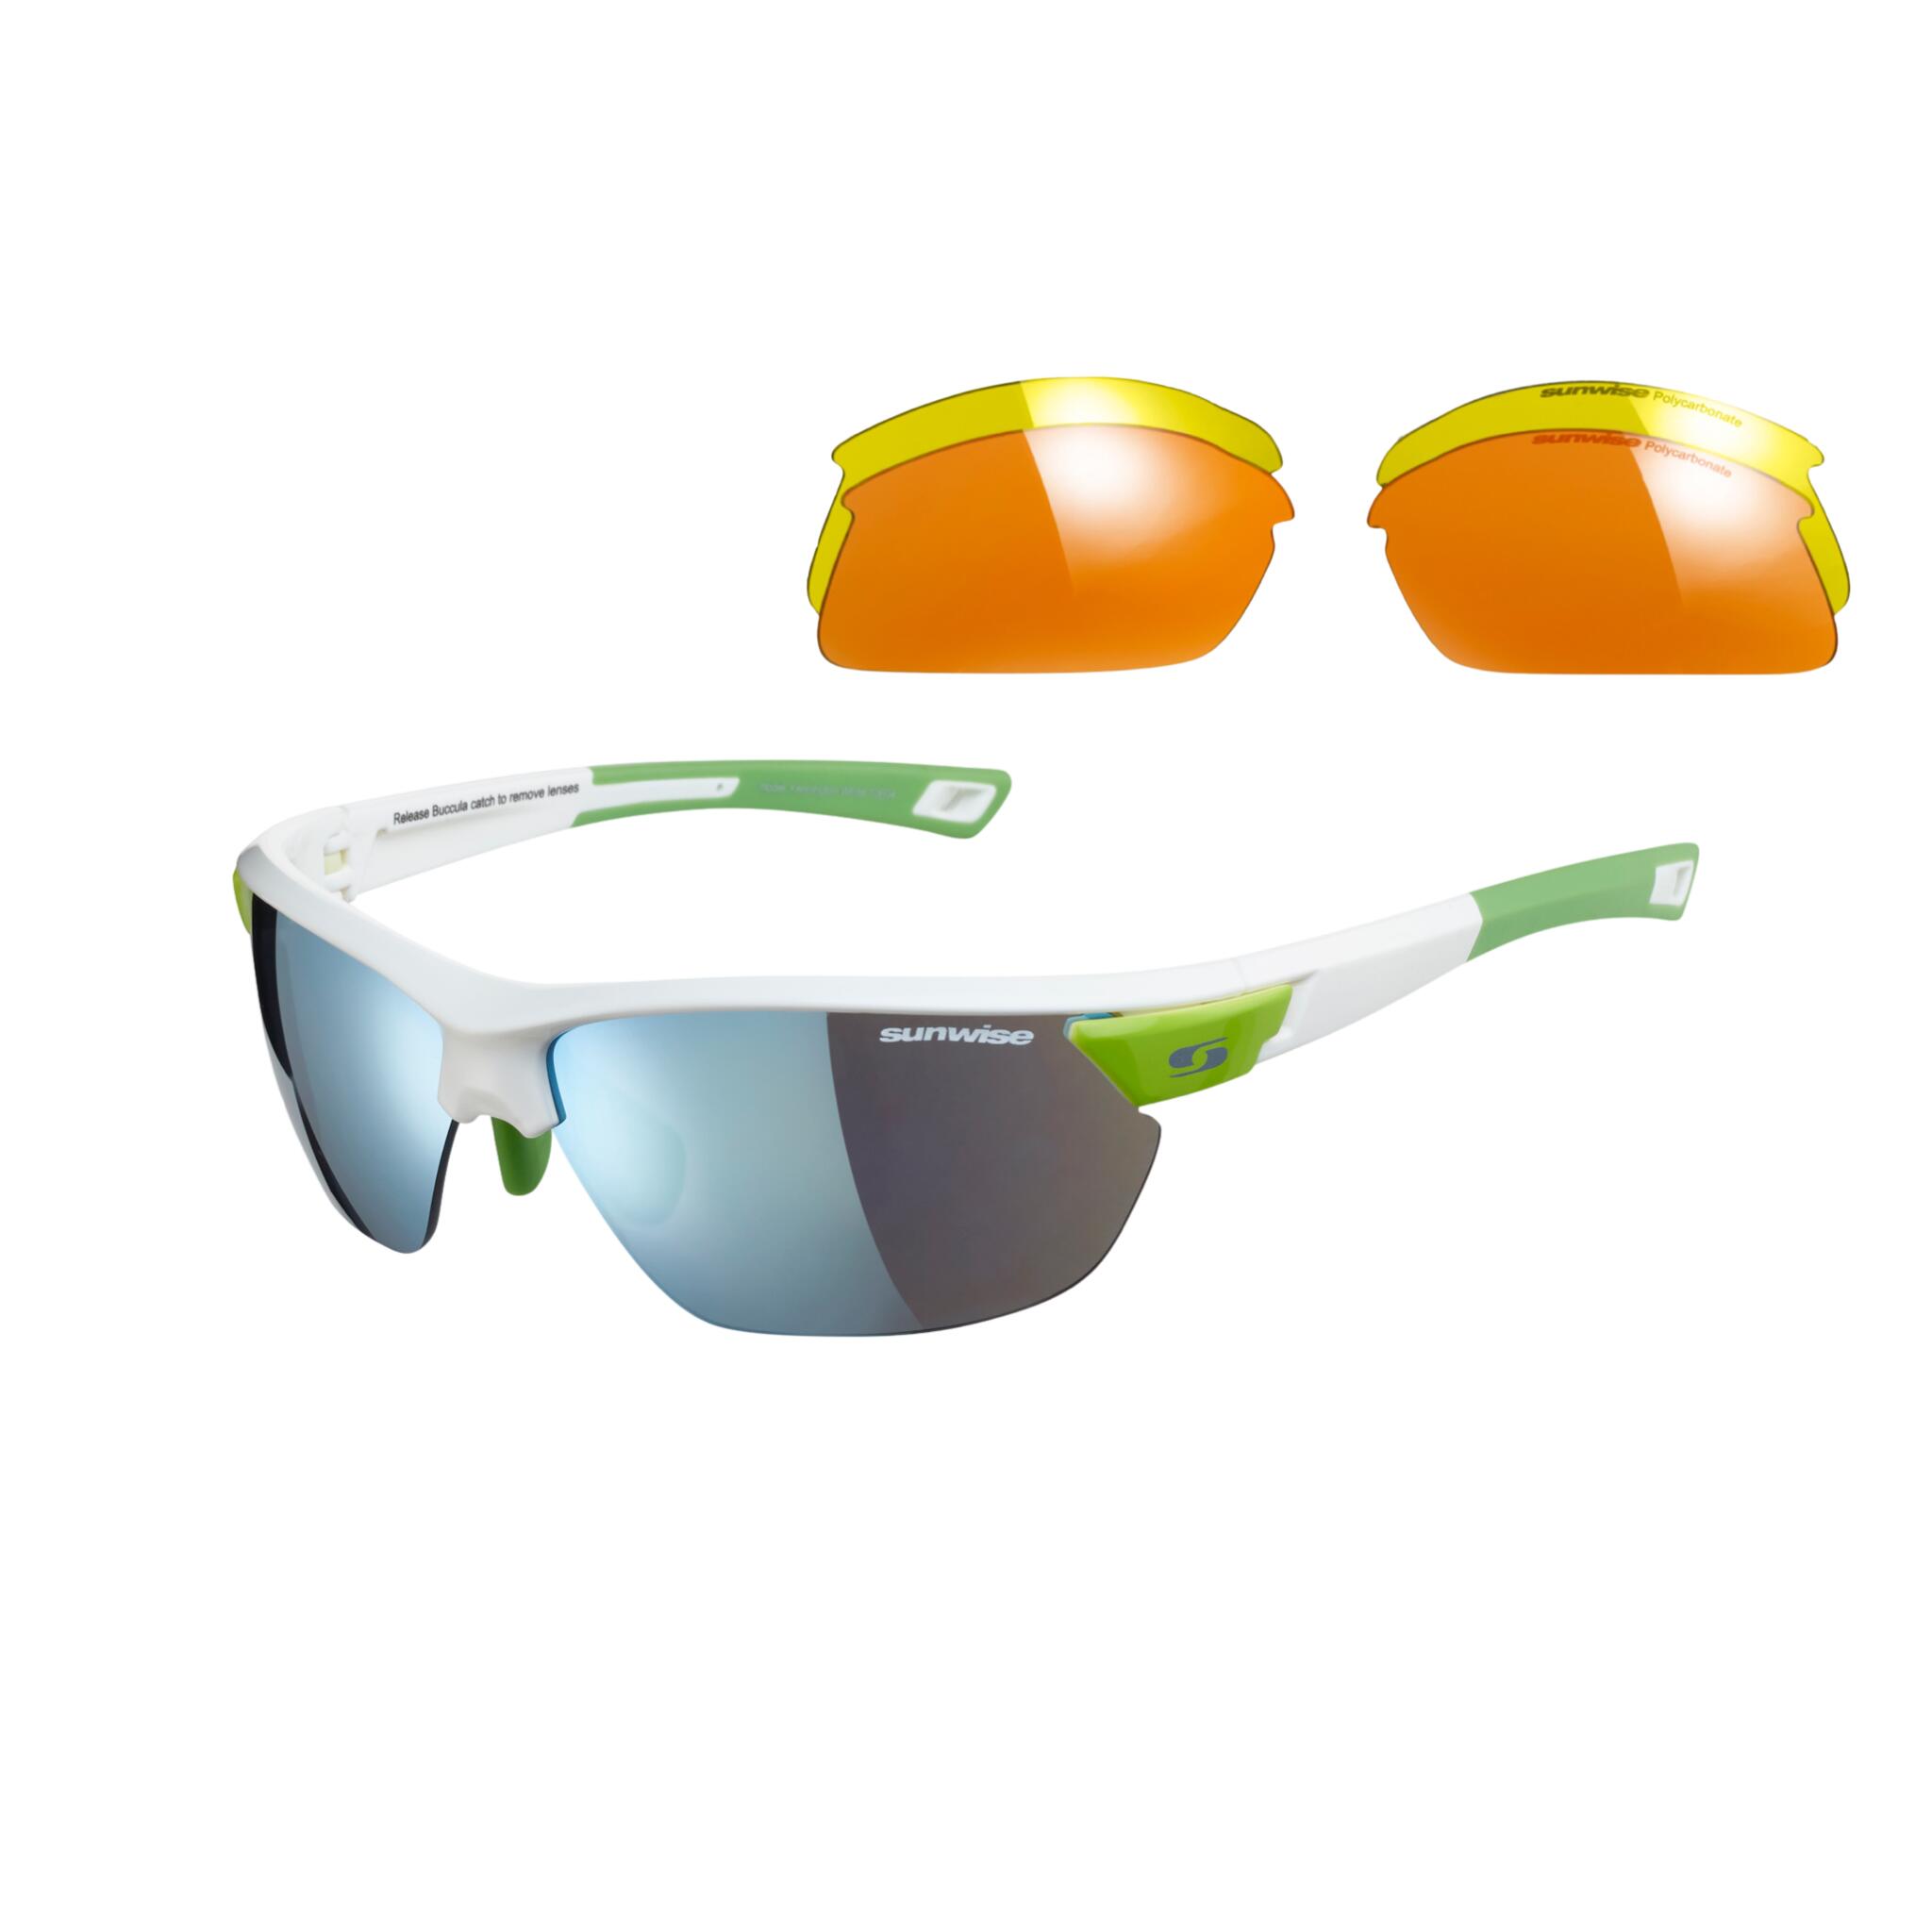 Kennington Sports Sunglasses - Category 1-3 1/3